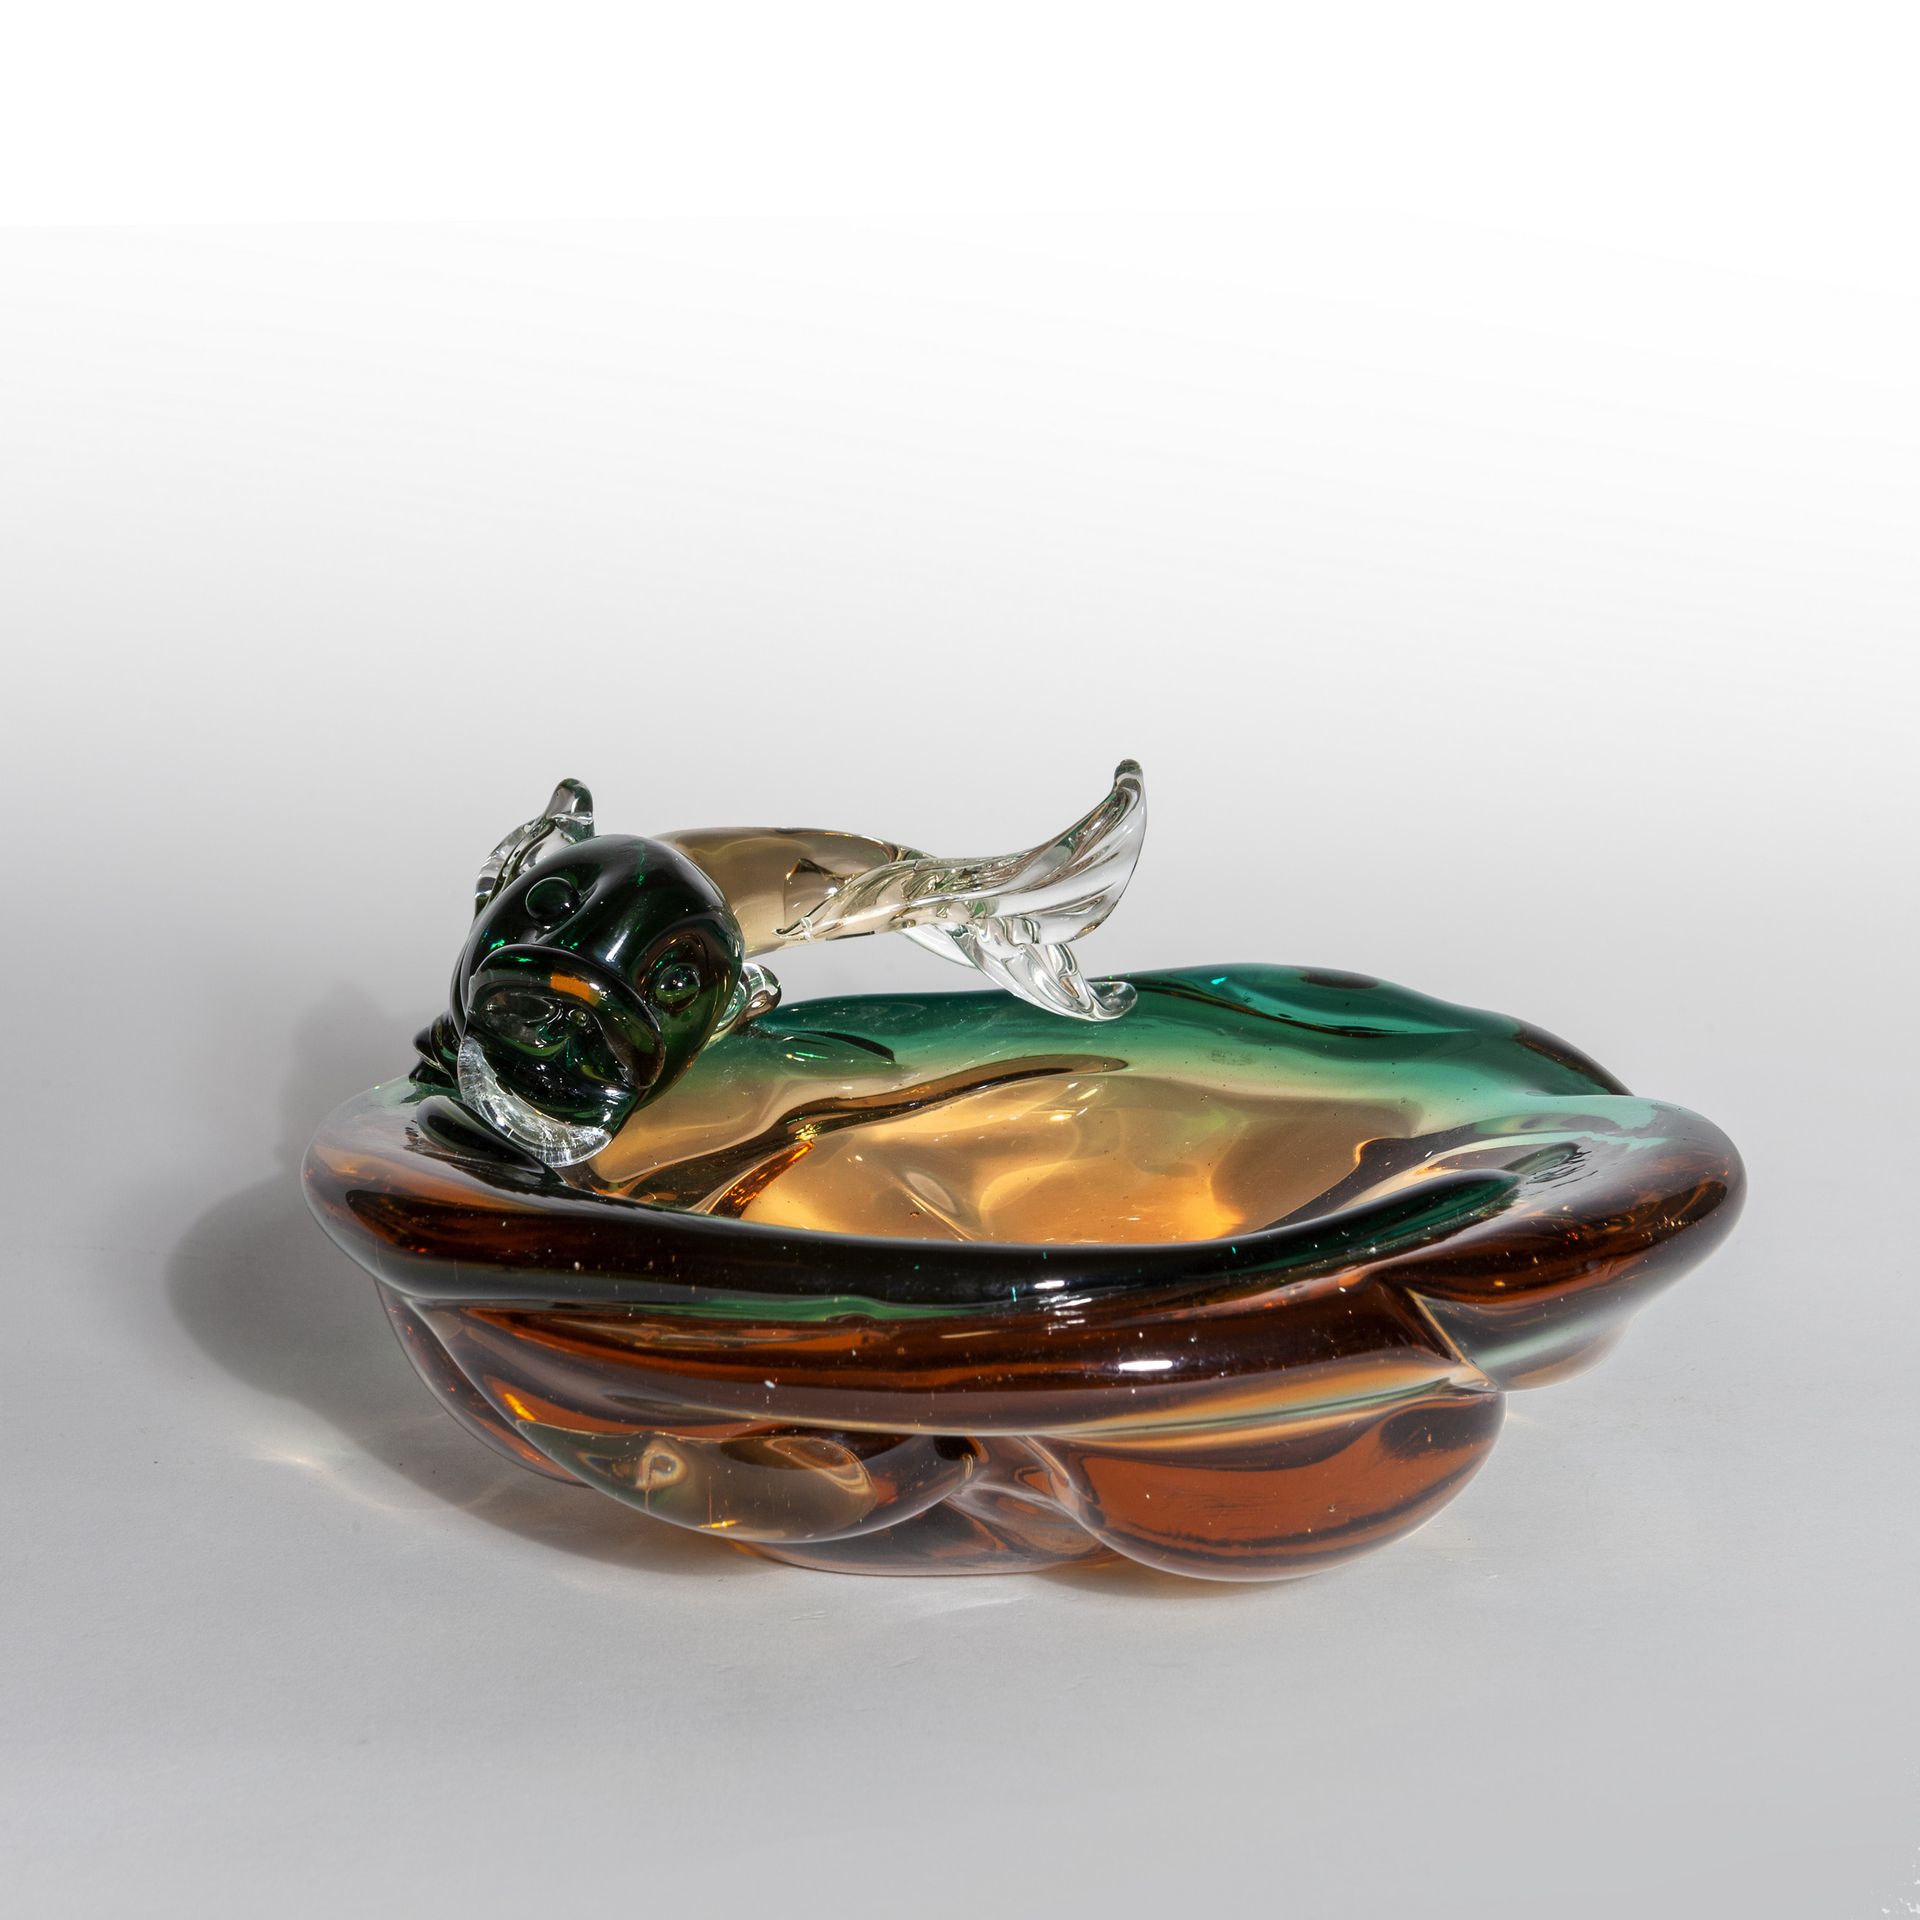 Seguso Vetri d'Arte SEGUSO VETRI D'ARTE
Eine schwere, getönte Glasschale mit Fis&hellip;